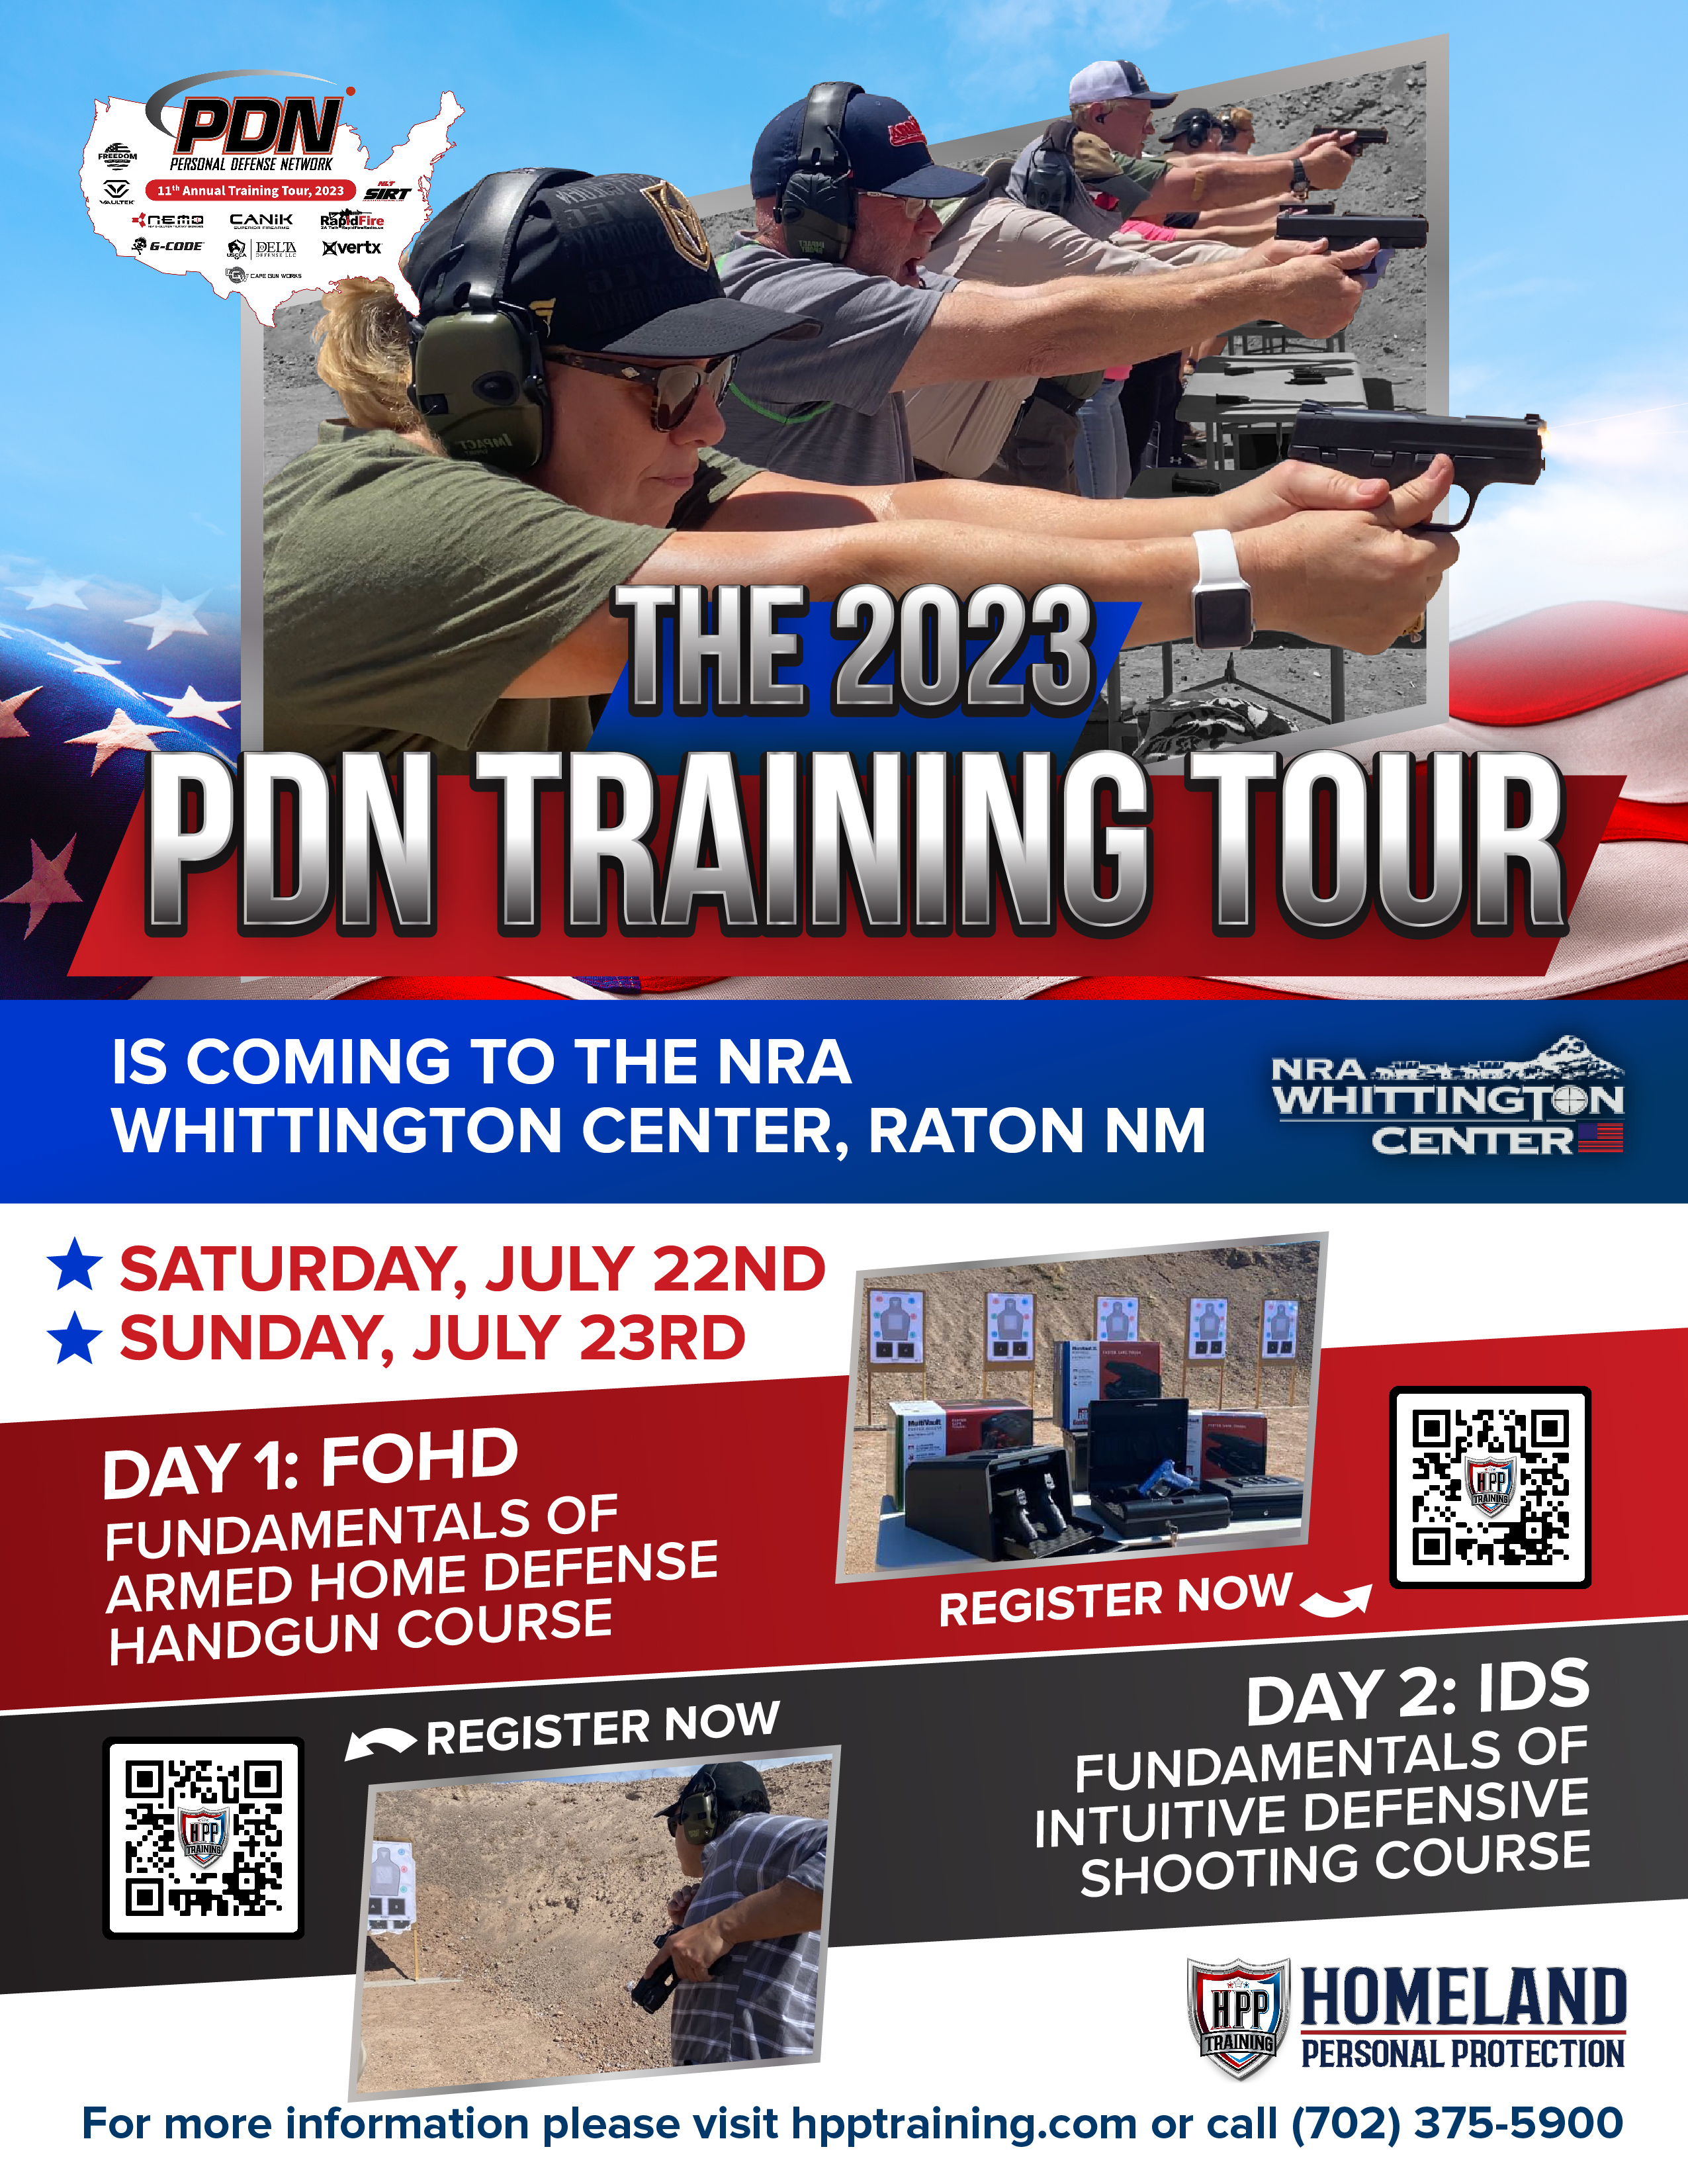 The 2023 PDN Training Tour